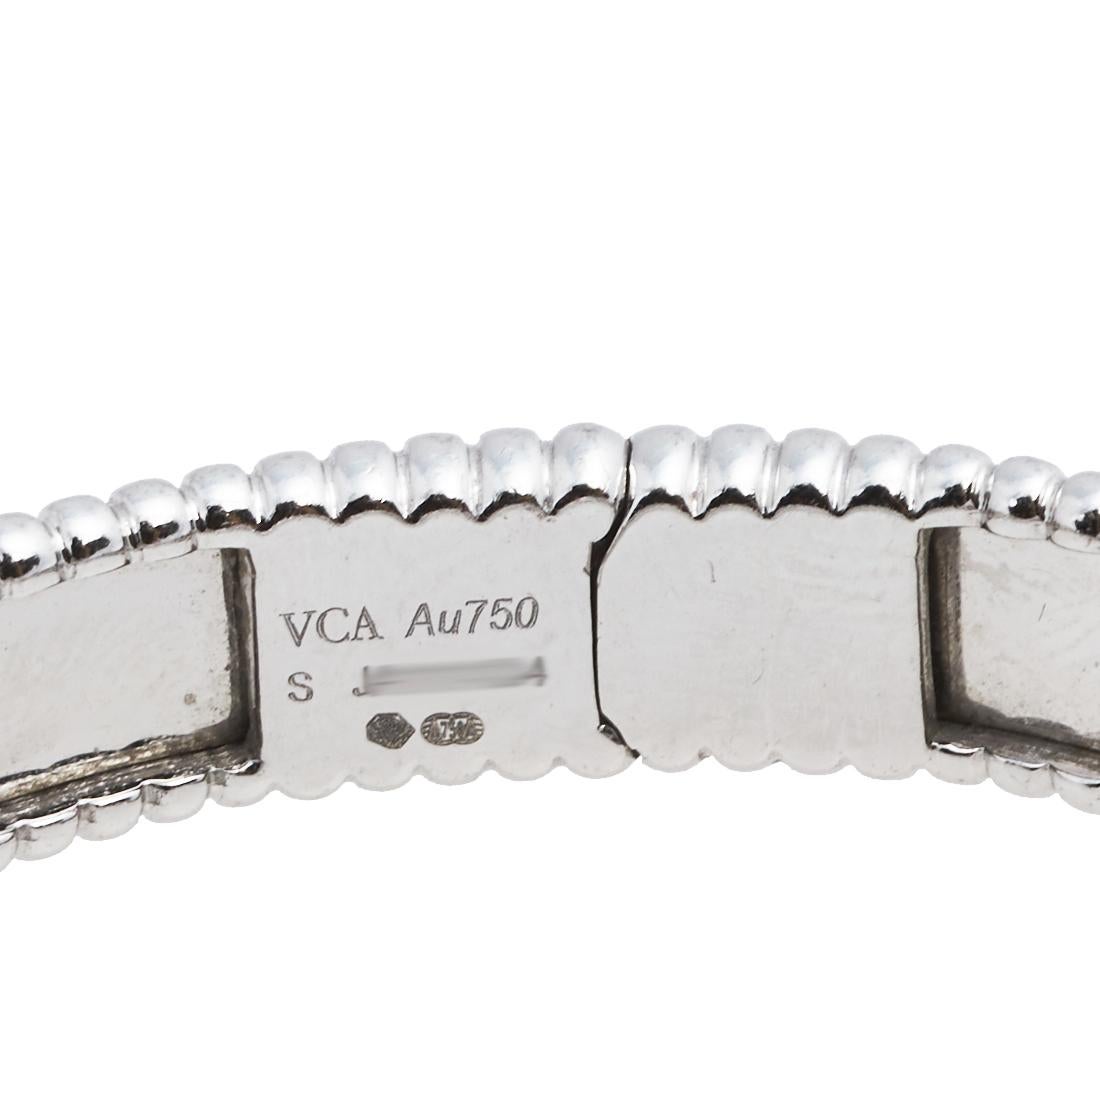 Contemporary Van Cleef & Arpels Perlee Signature 18k White Gold Cuff Bracelet S